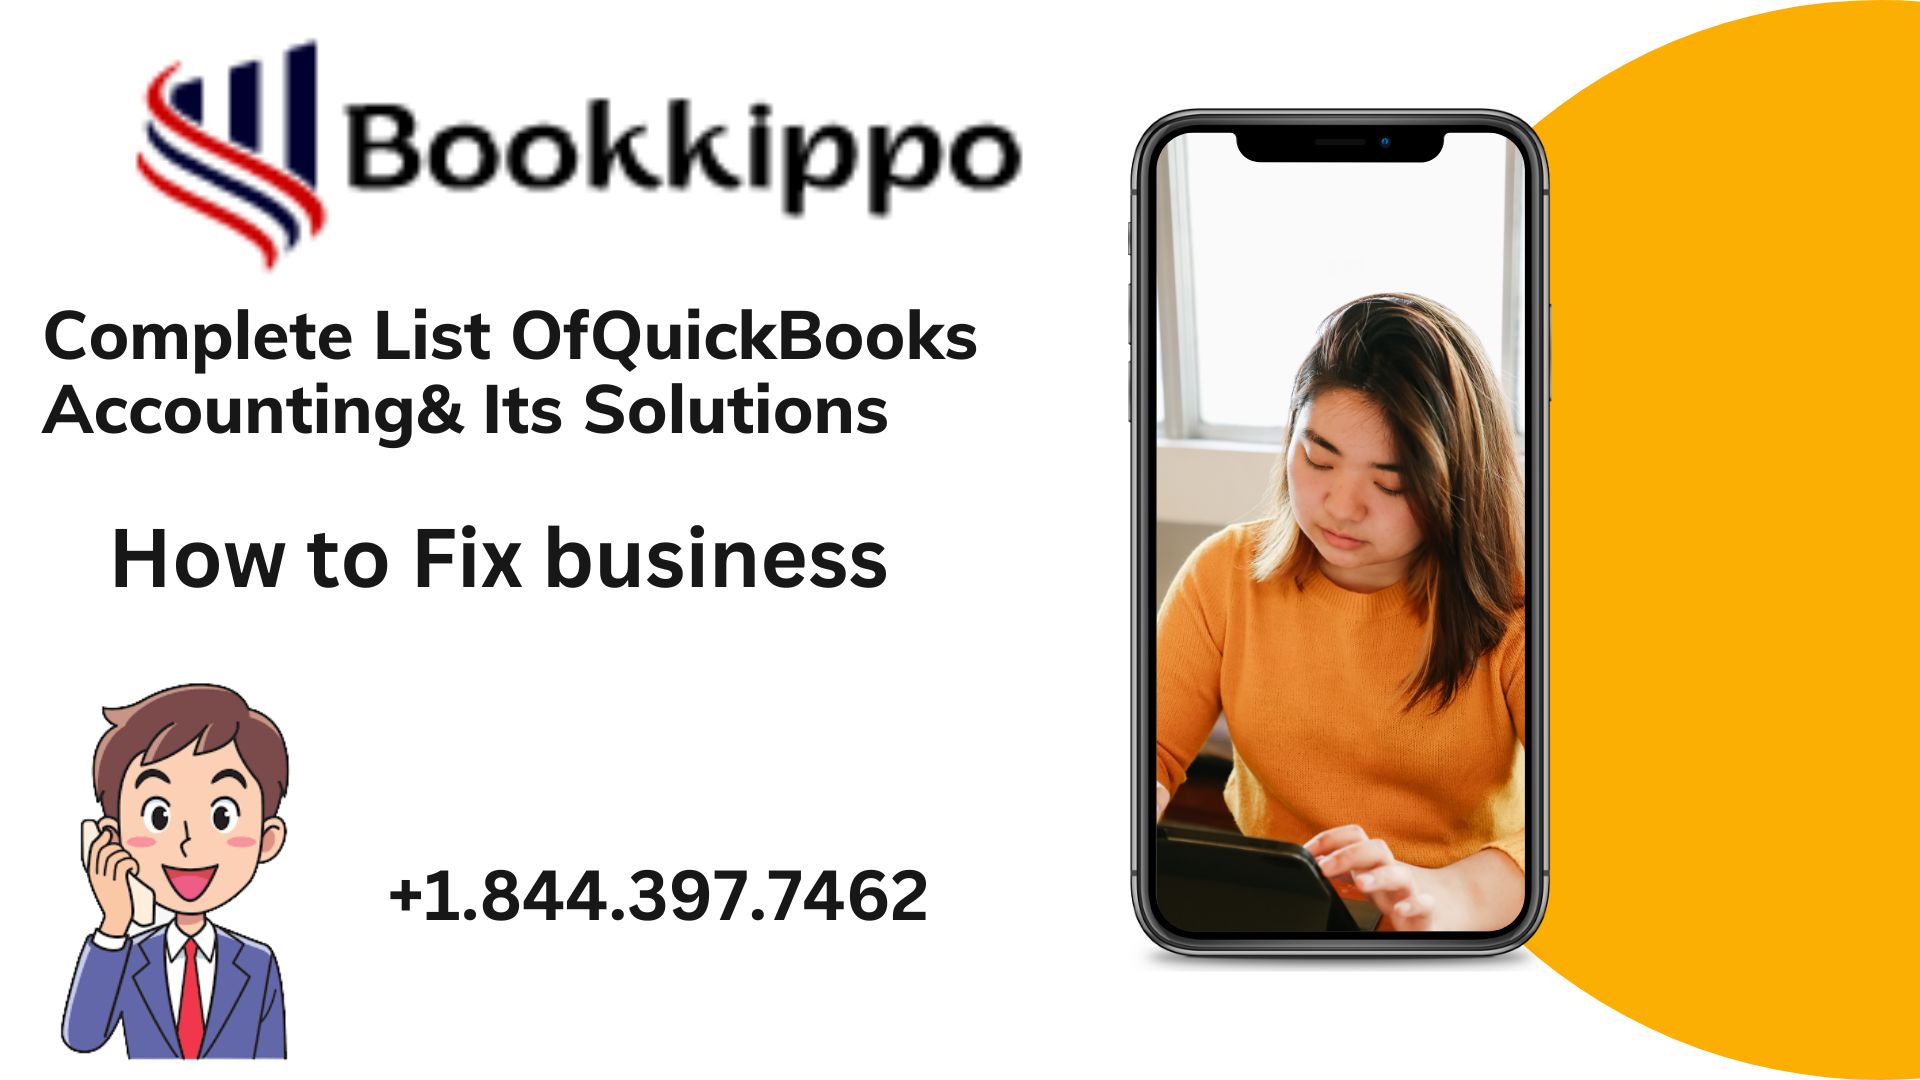 QuickBooks Customer Support Number +1.844.397.7462